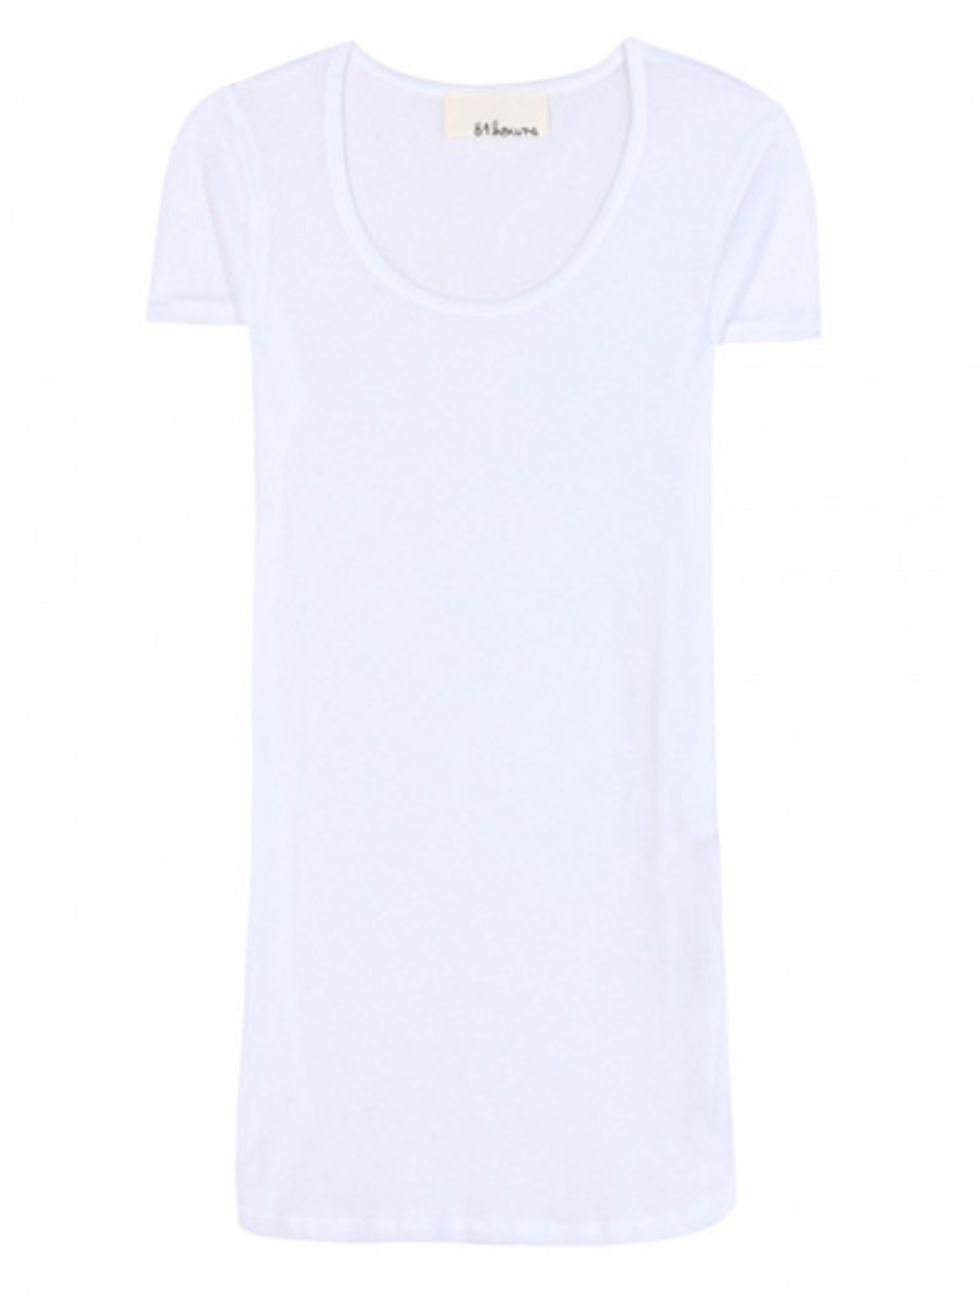 Product, Sleeve, White, Grey, Aqua, Active shirt, Top, 